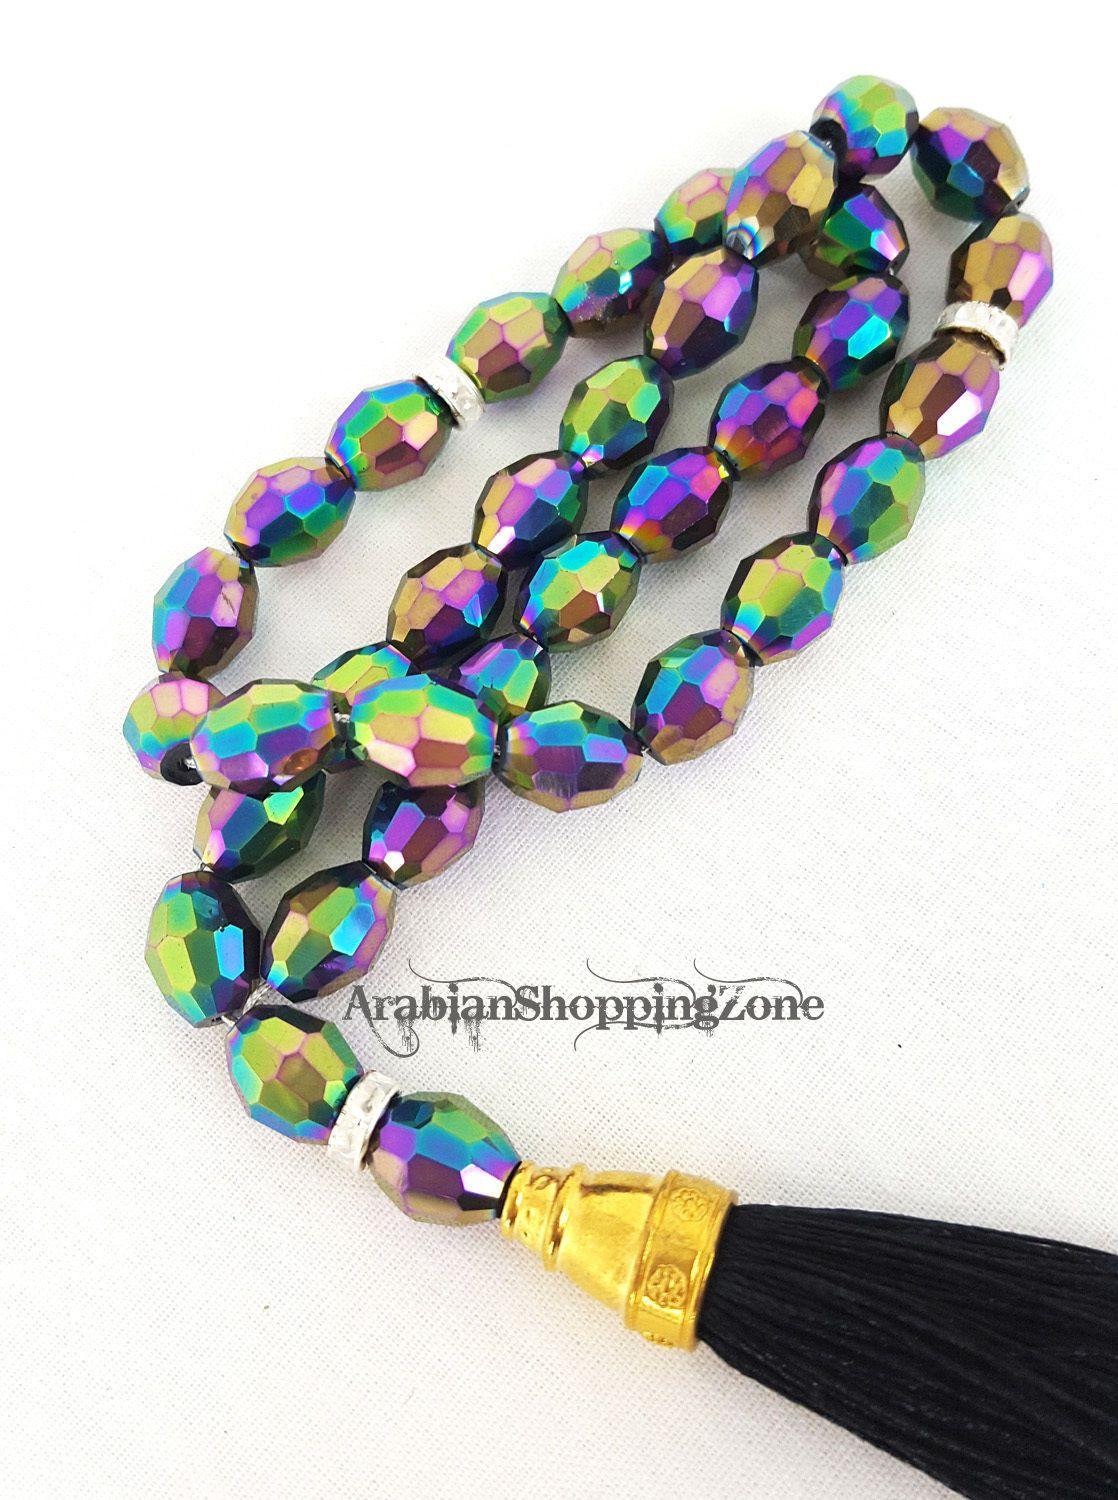 Islamic Salah 12mm Colorful Crystal Prayer Beads 33 - Arabian Shopping Zone